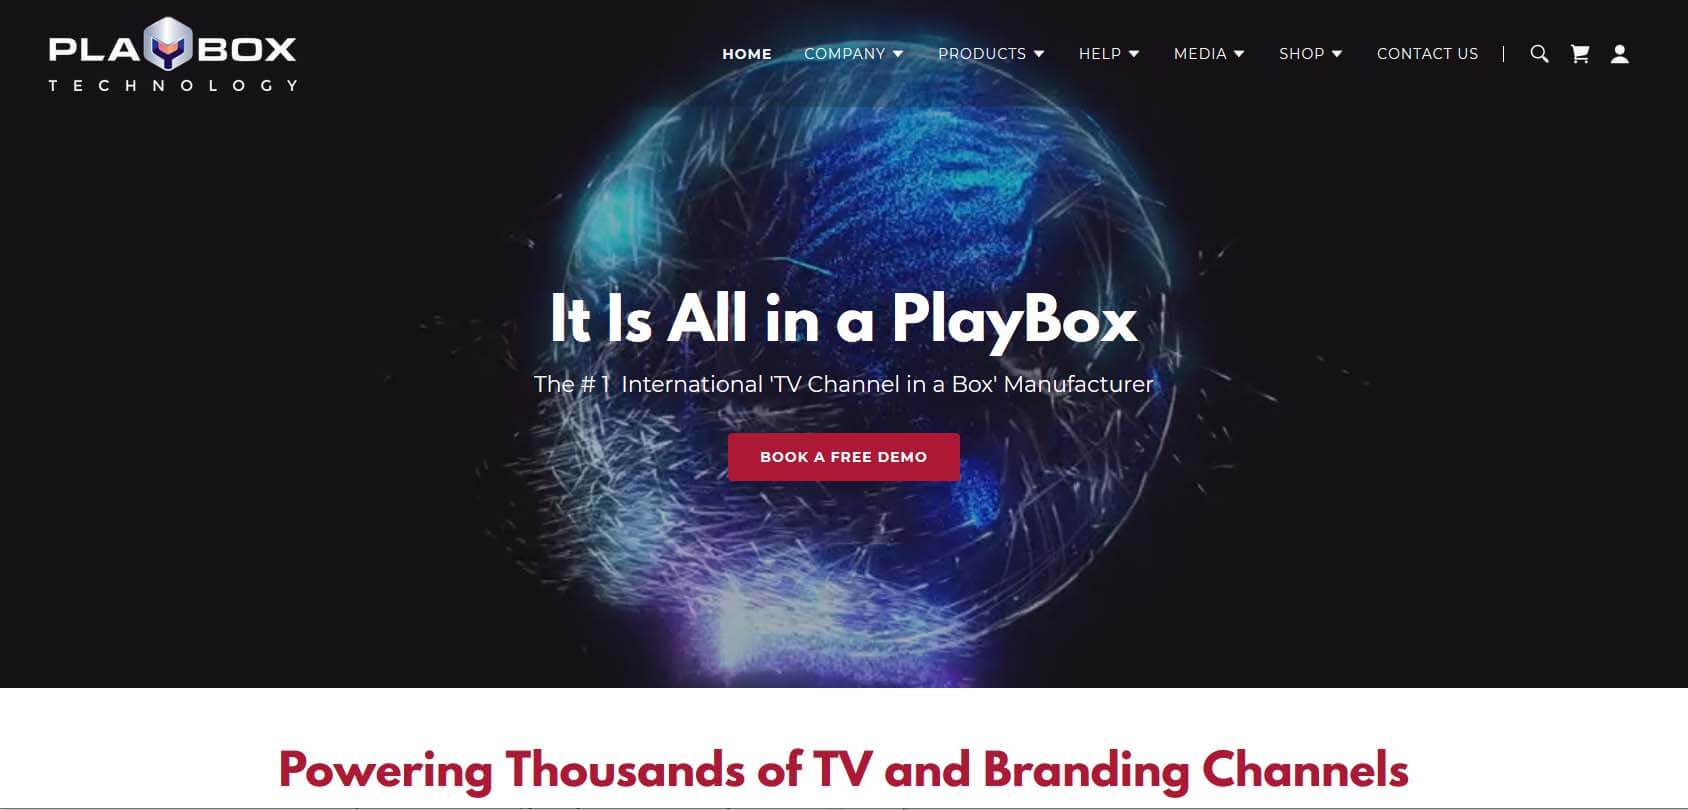 Playbox Technology Homepage